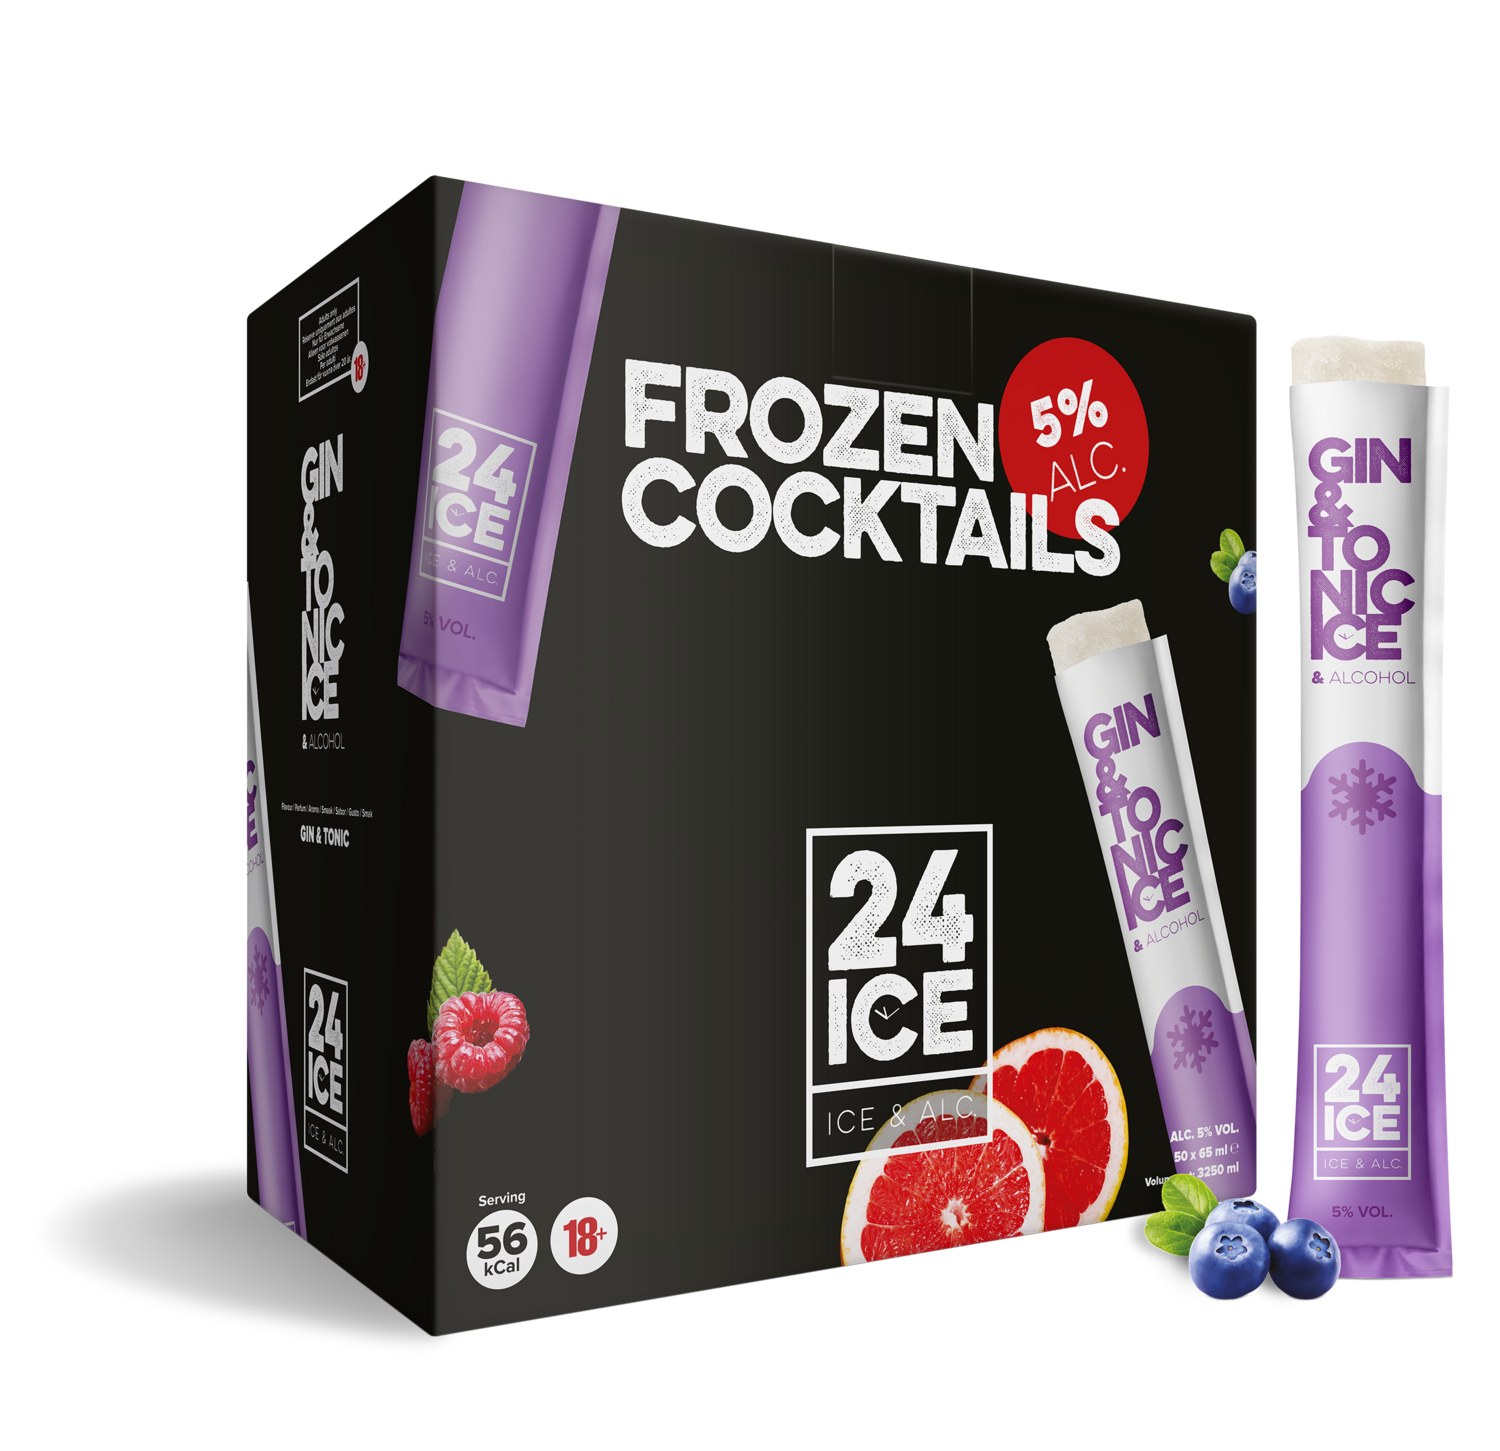 24 ICE - Gin & Tonic Frozen Cocktail - Box: 50 x 65ml